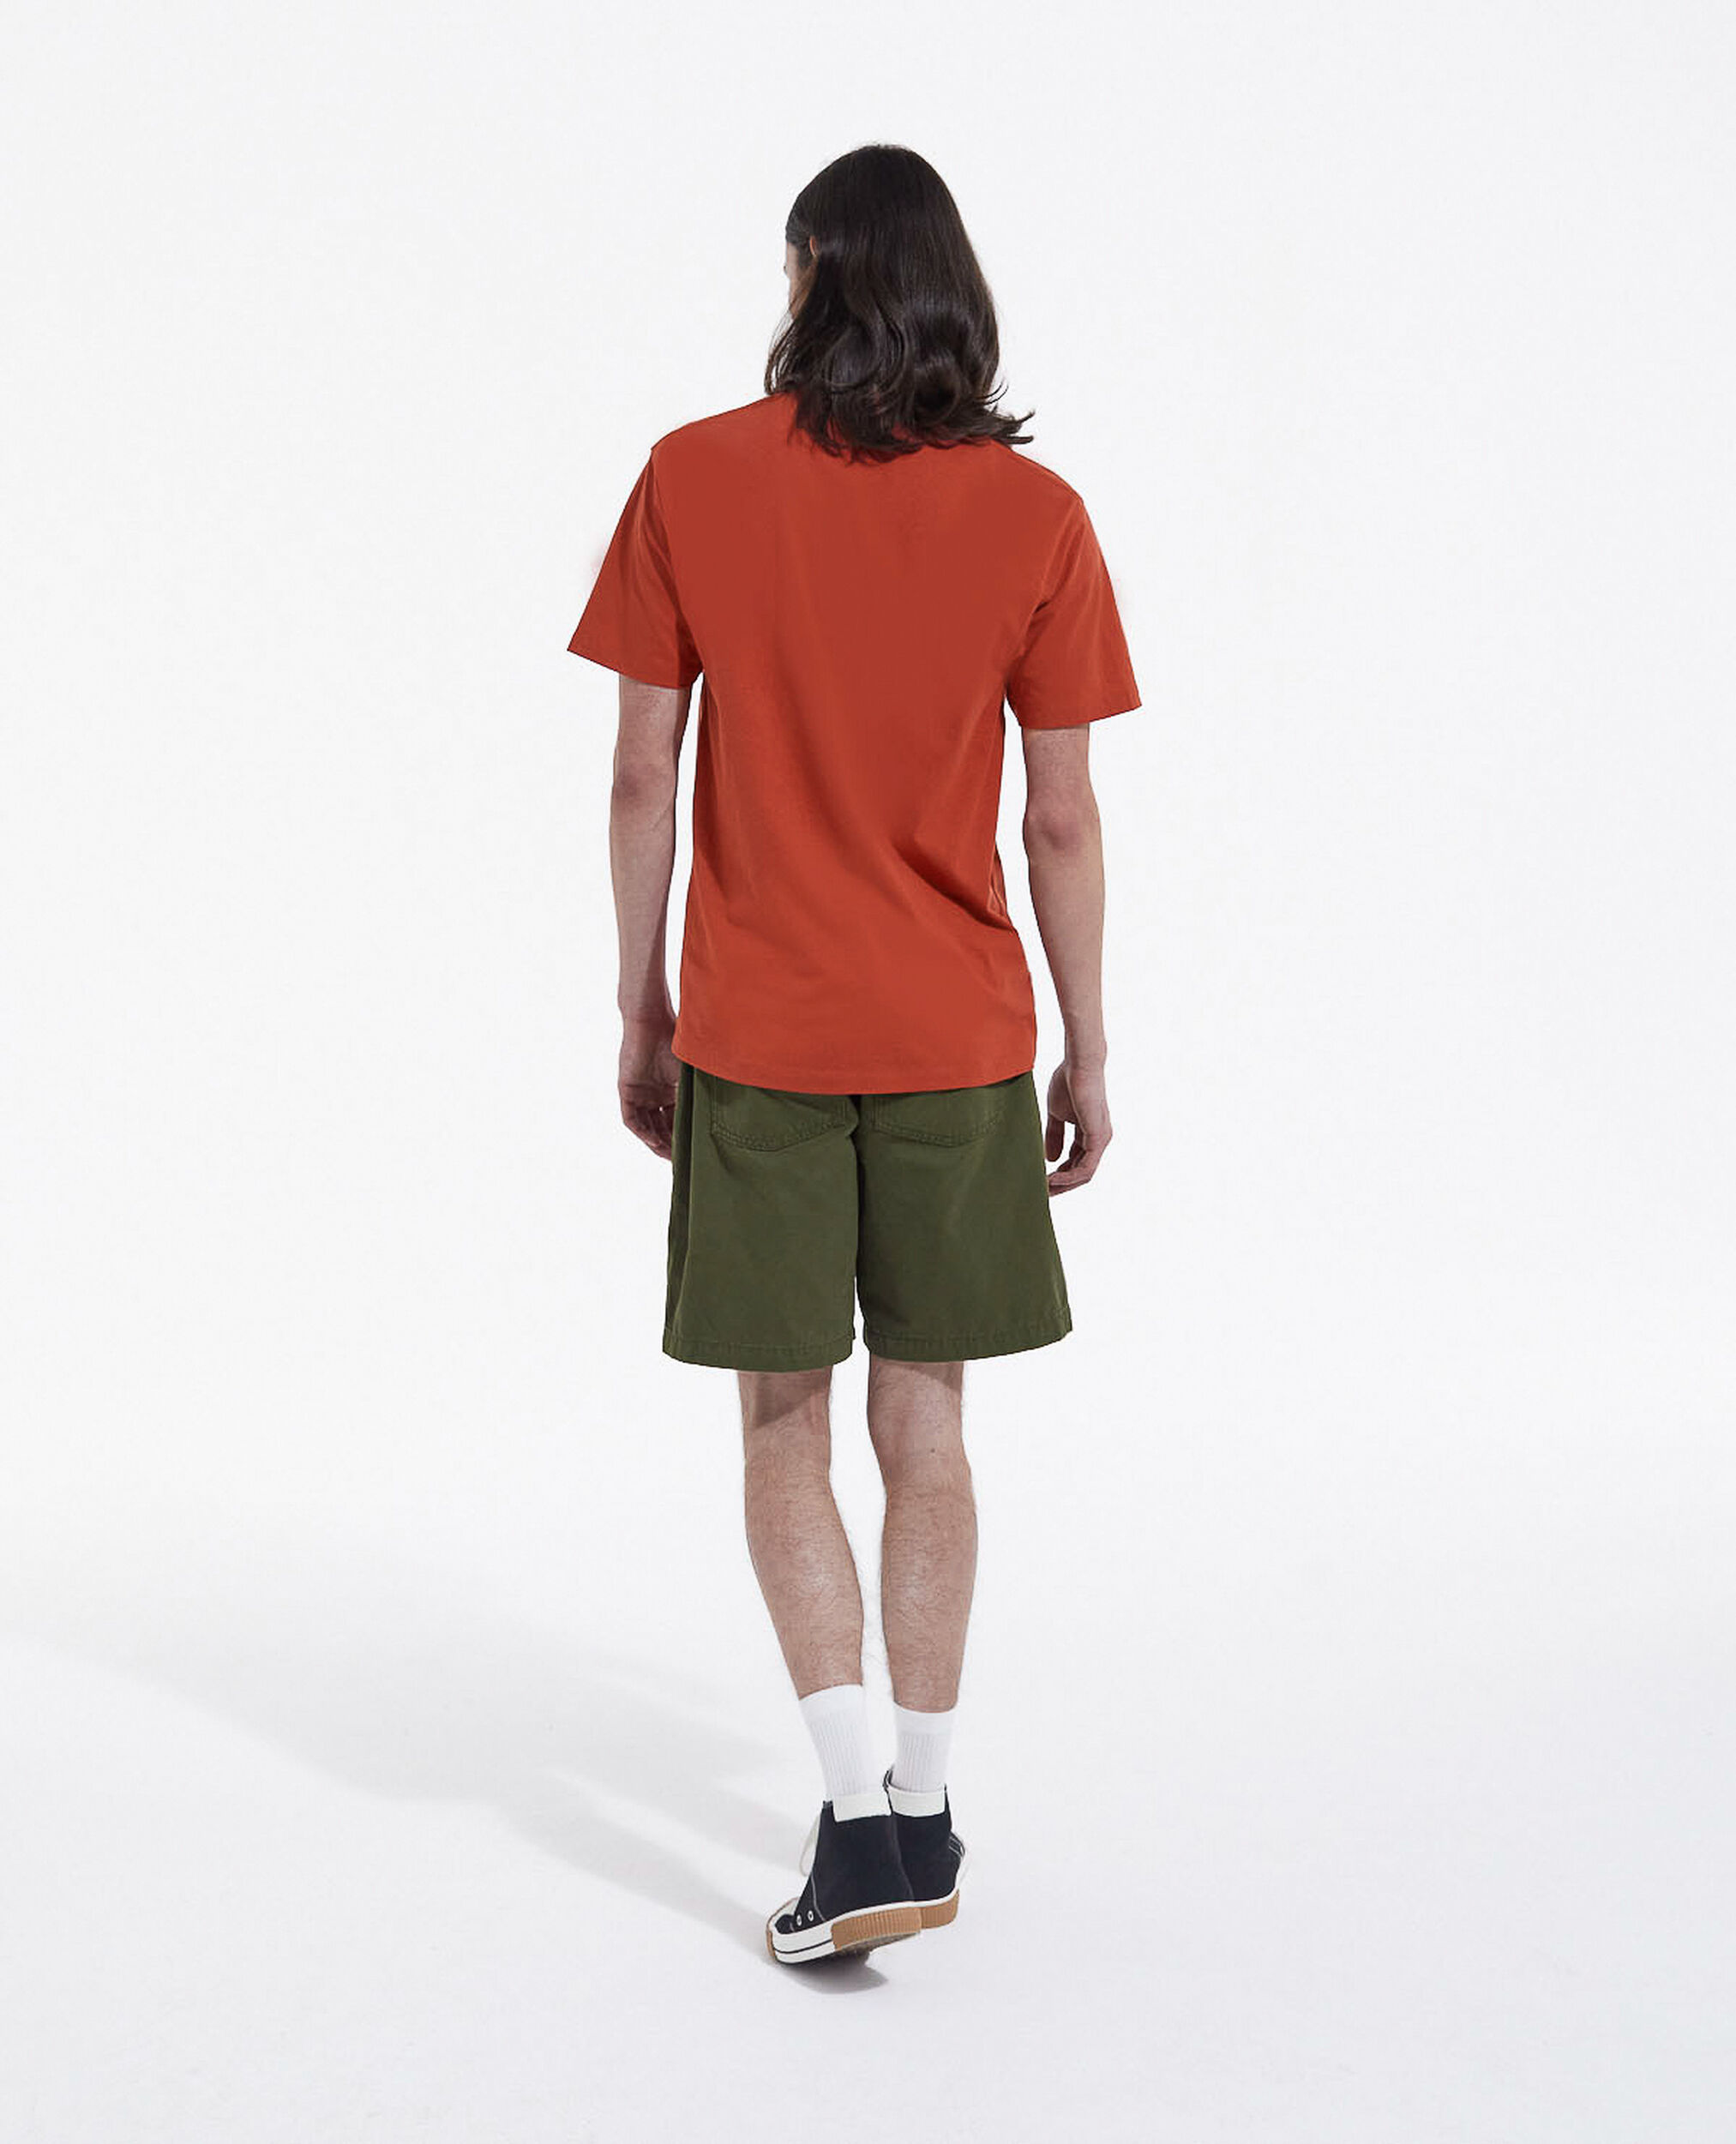 Long khaki cotton shorts with four pockets, KAKI, hi-res image number null